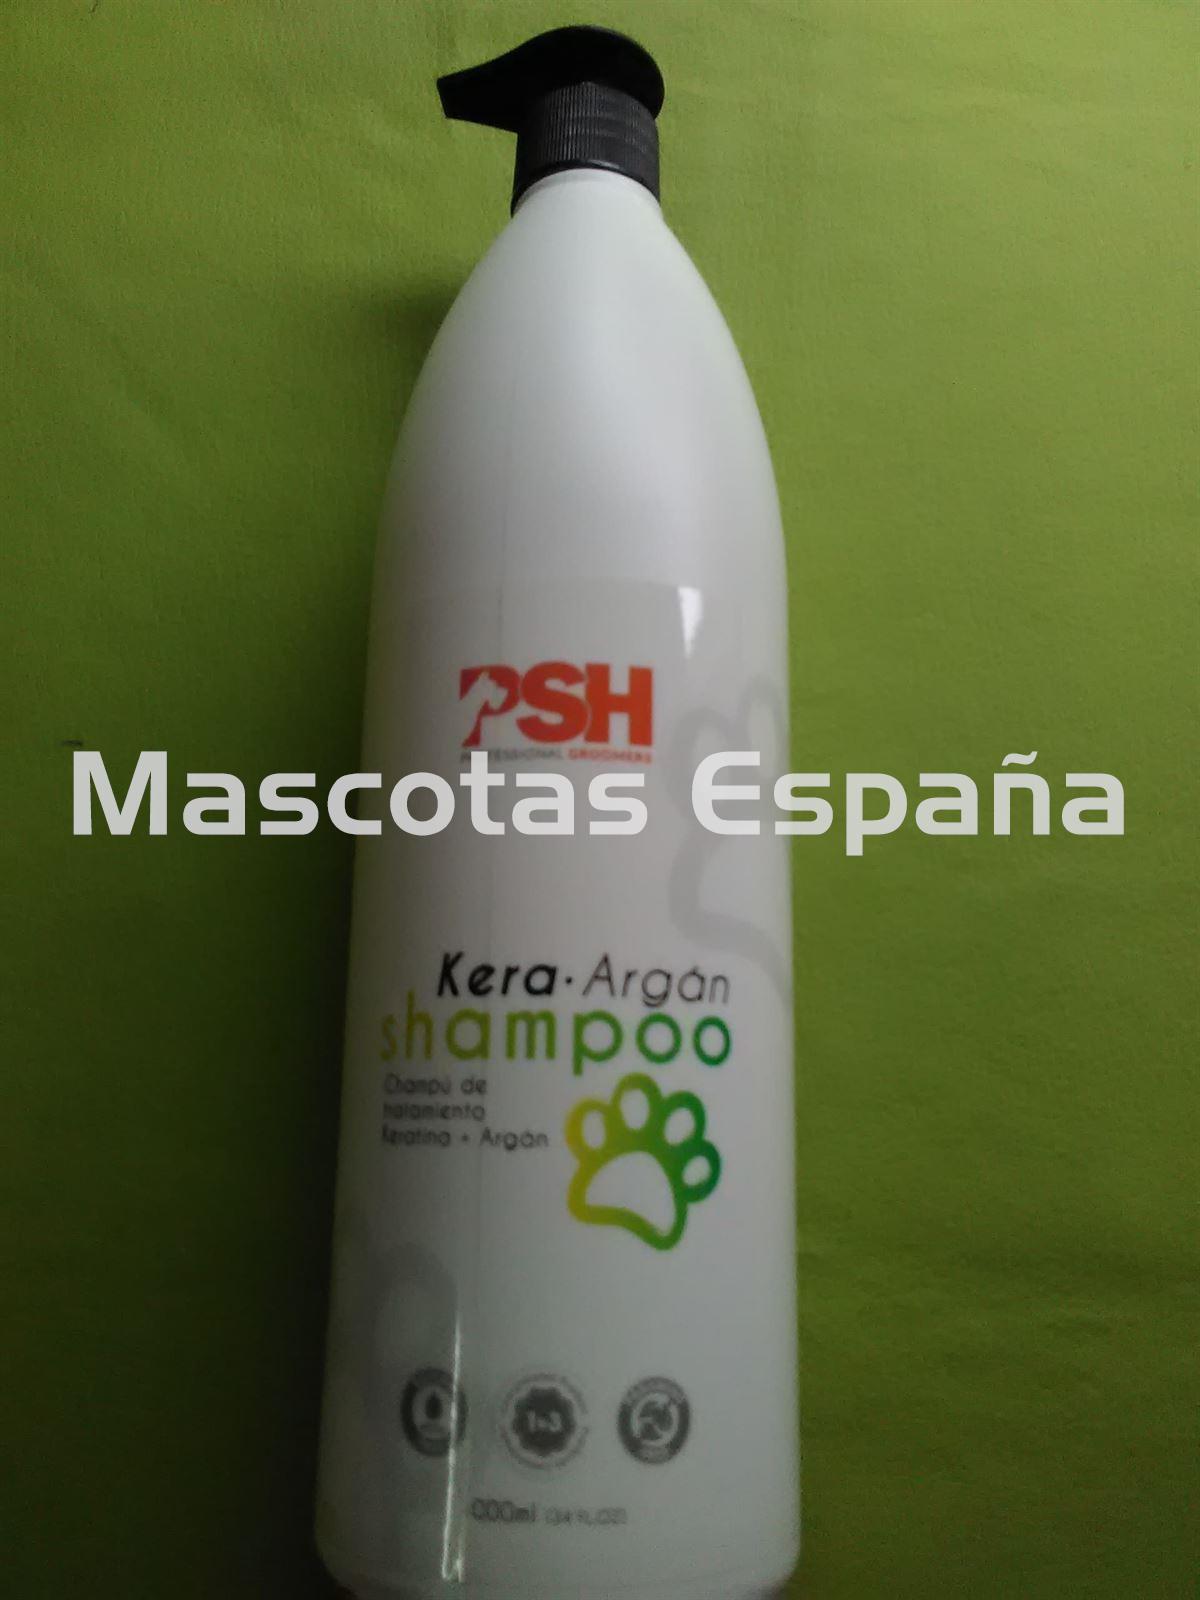 PSH Kera-Argán Shampoo (Champú de Tratamiento Keratina+Argán) 1L - Imagen 1